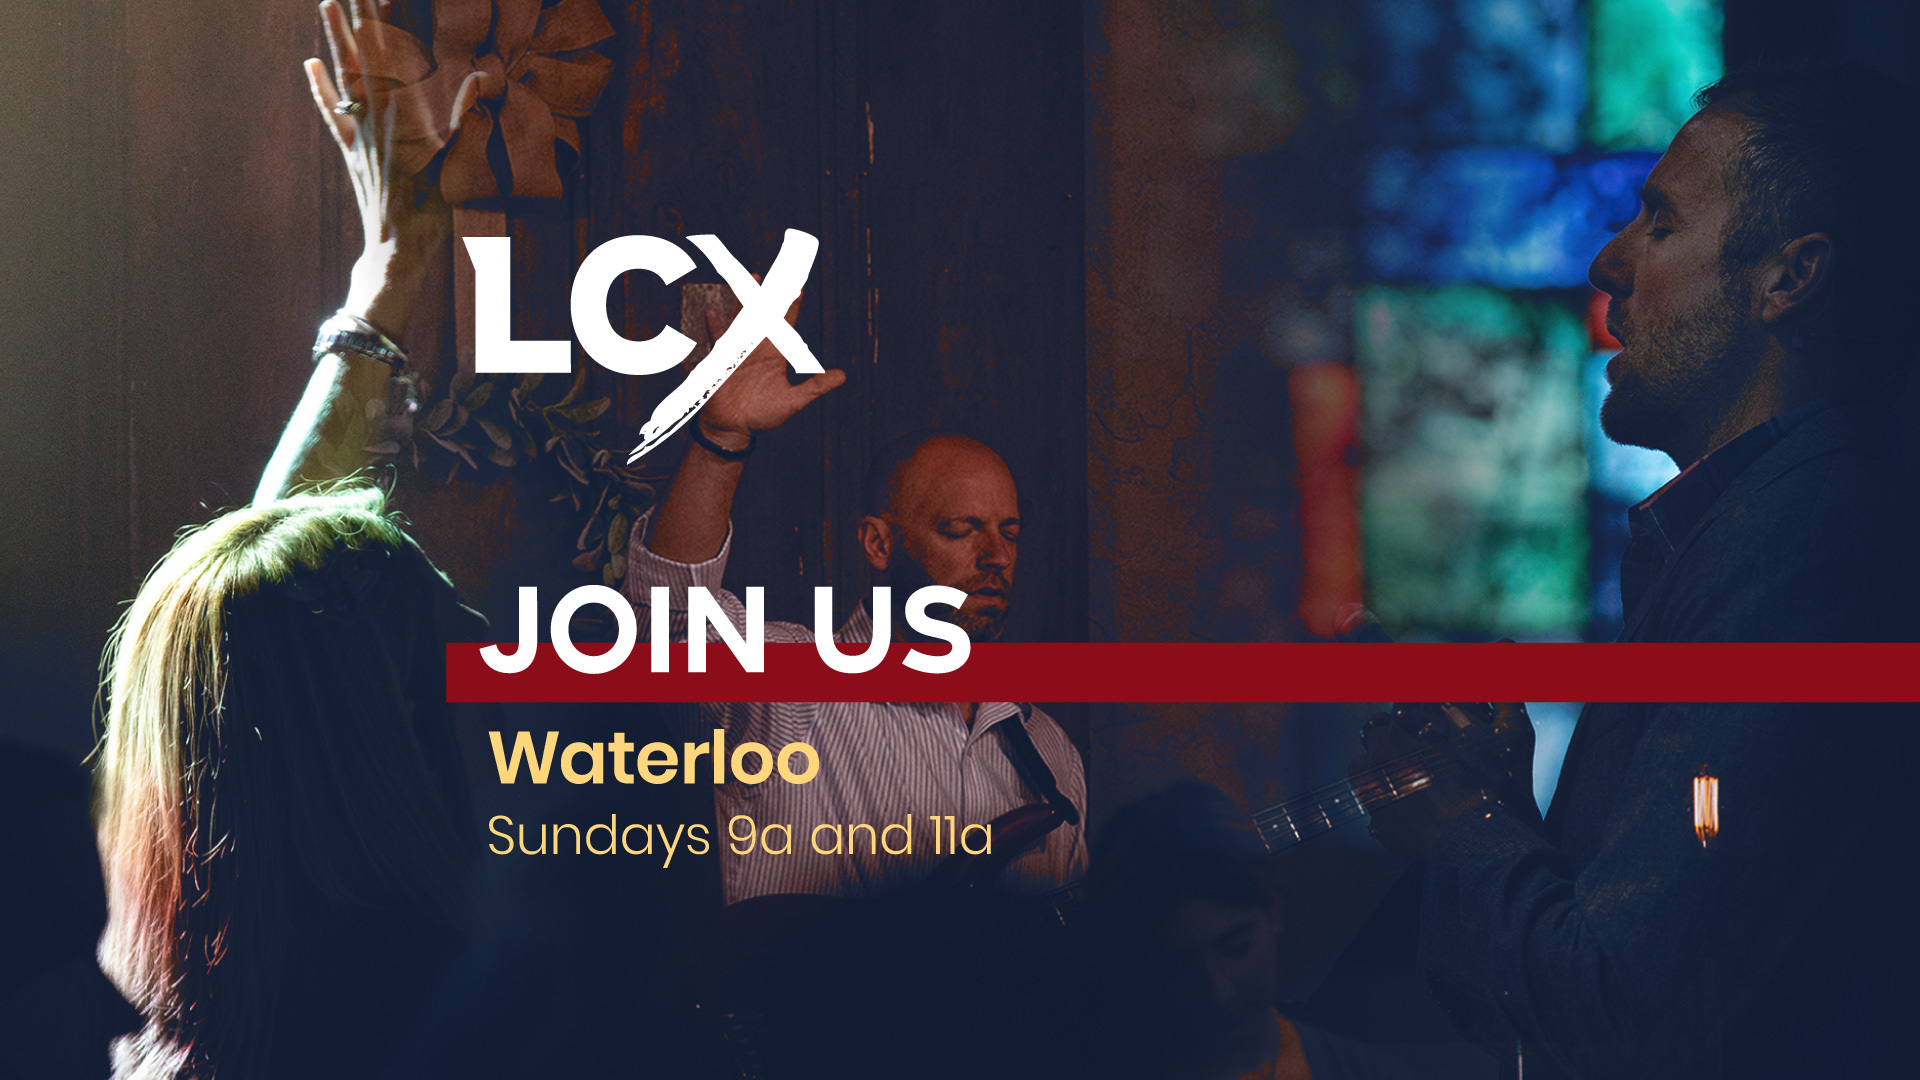 LifechurchX Waterloo IL Sunday Church Service